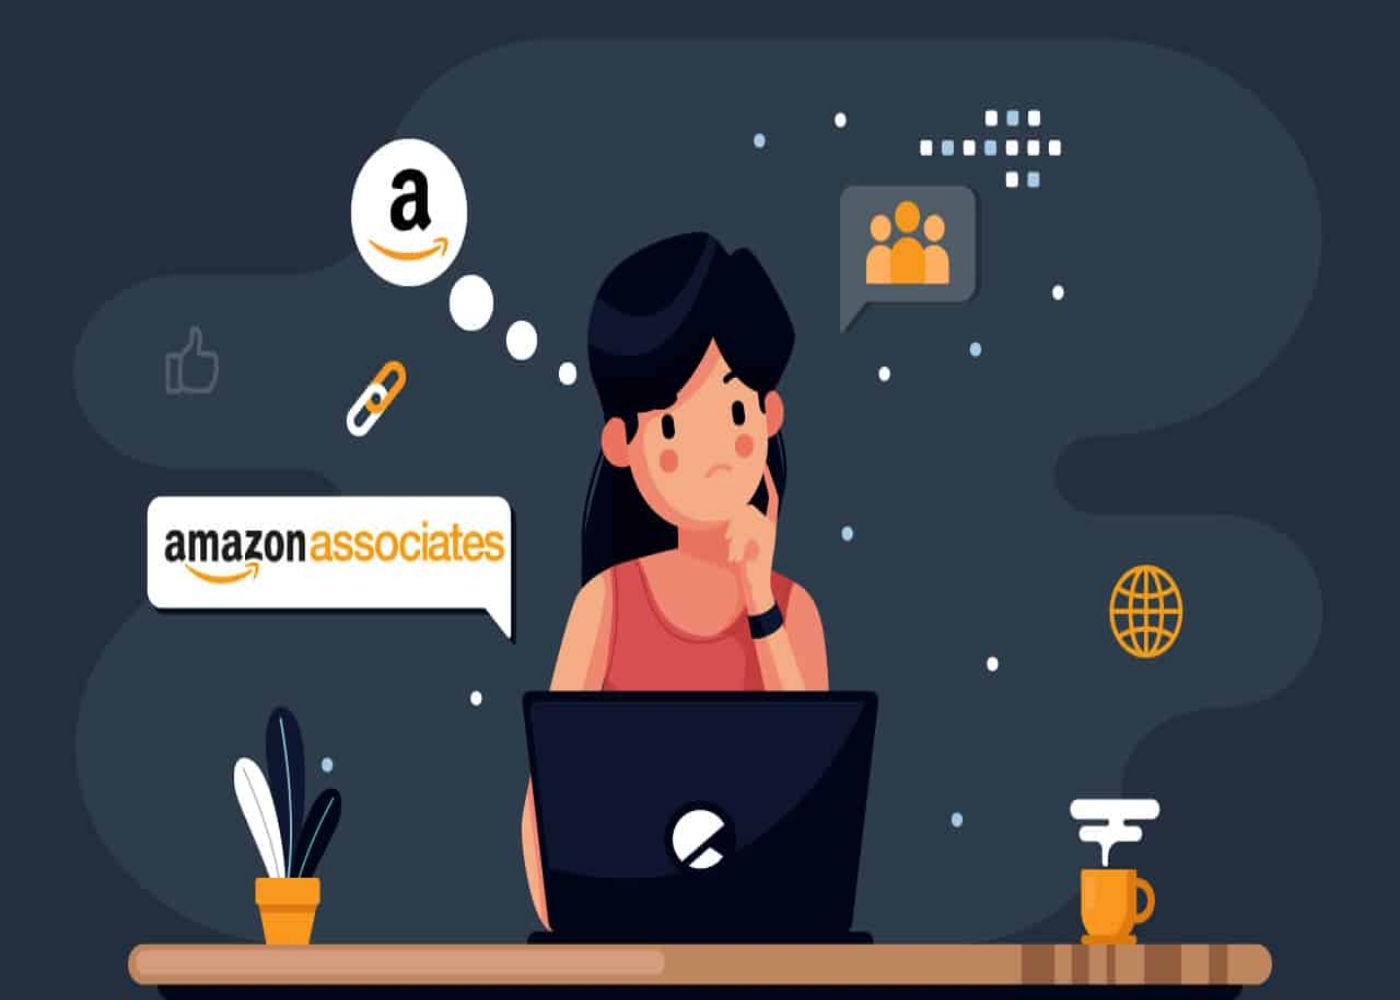 Estimated earnings of Amazon affiliates in 2021